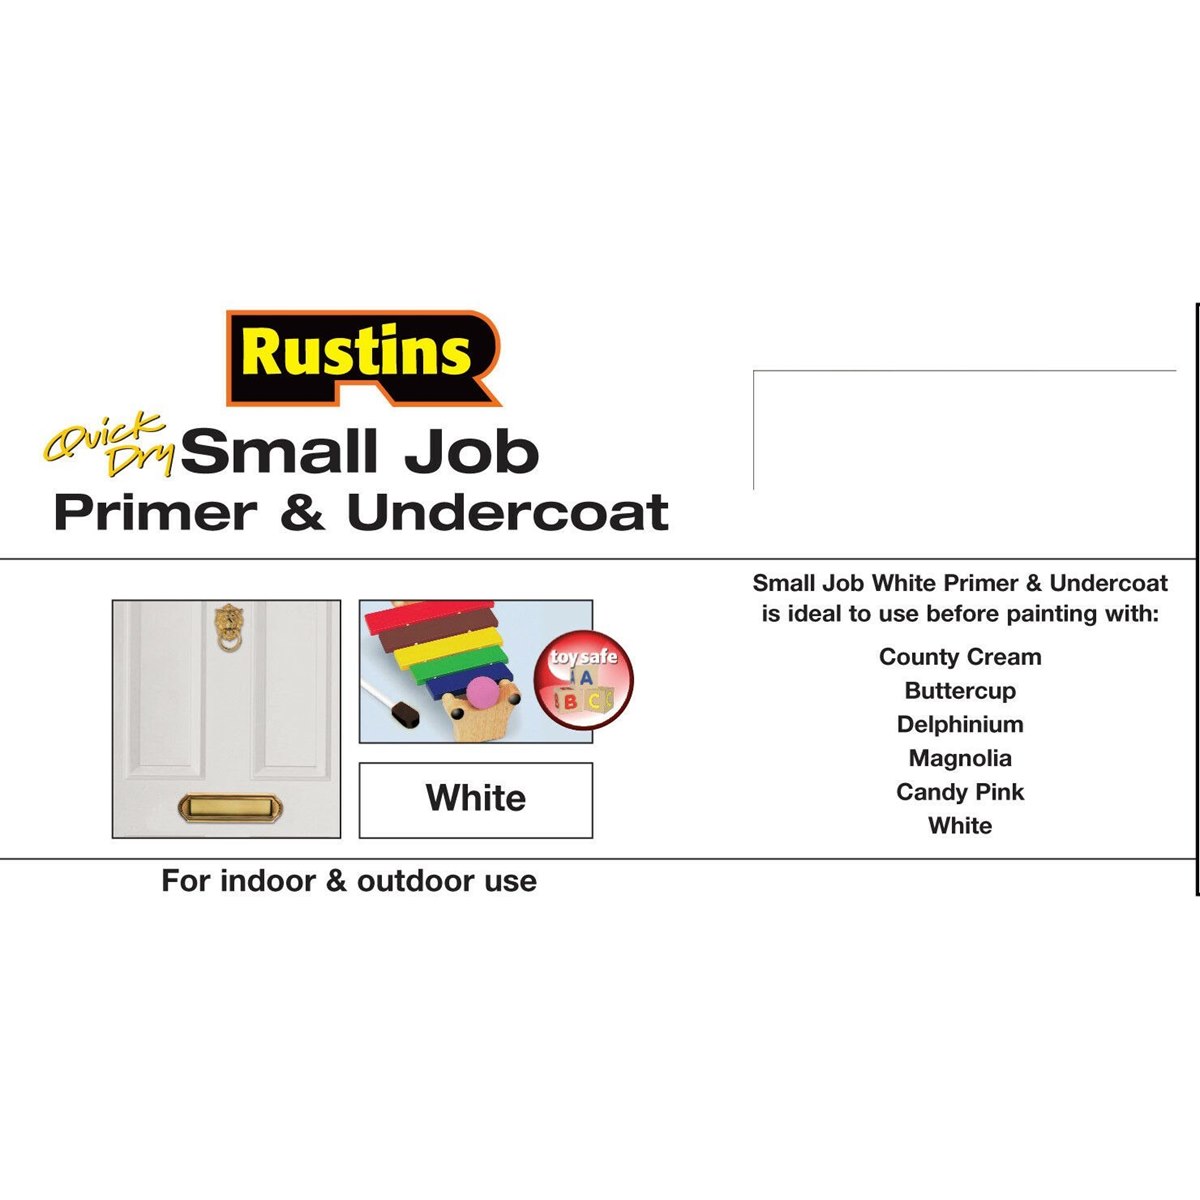 Where to buy Rustins Small Job Primer